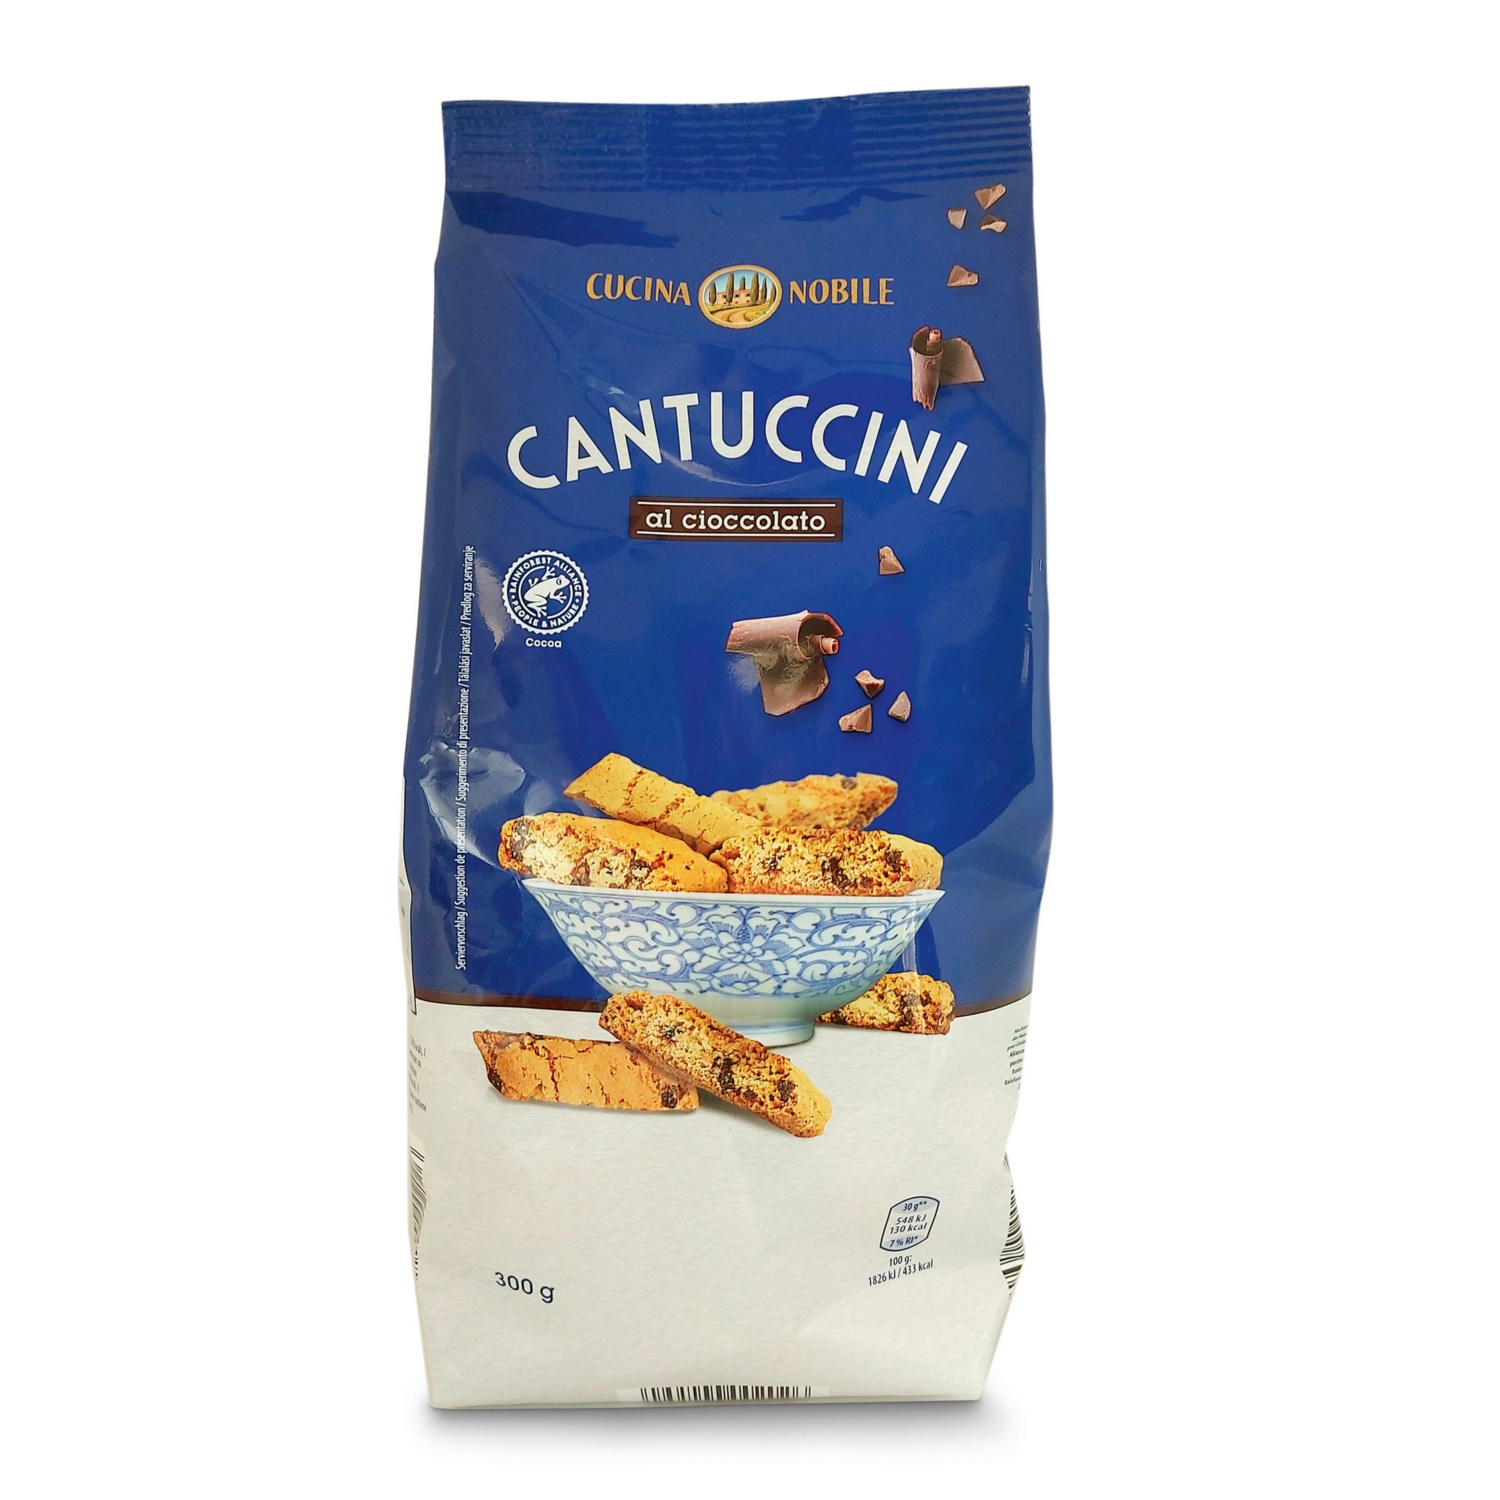 CUCINA NOBILE Cantuccini, chocolat